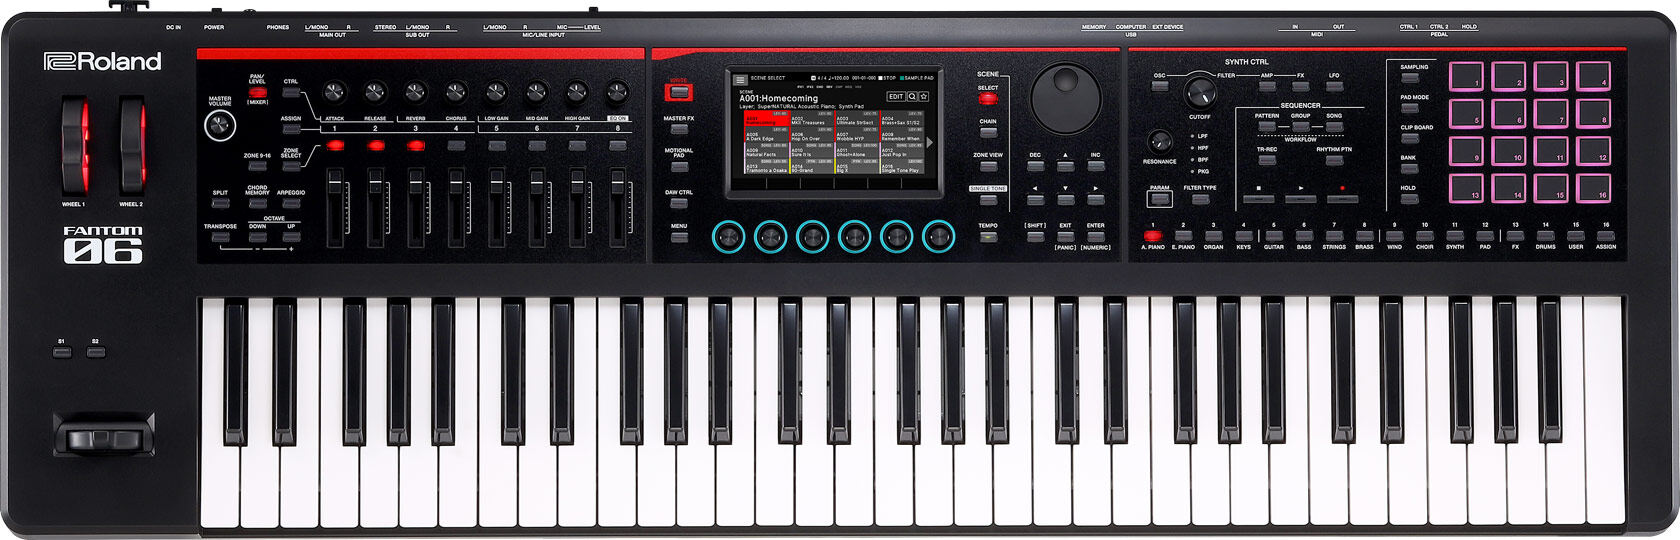 61 key high-quality voice synthesizer keyboard